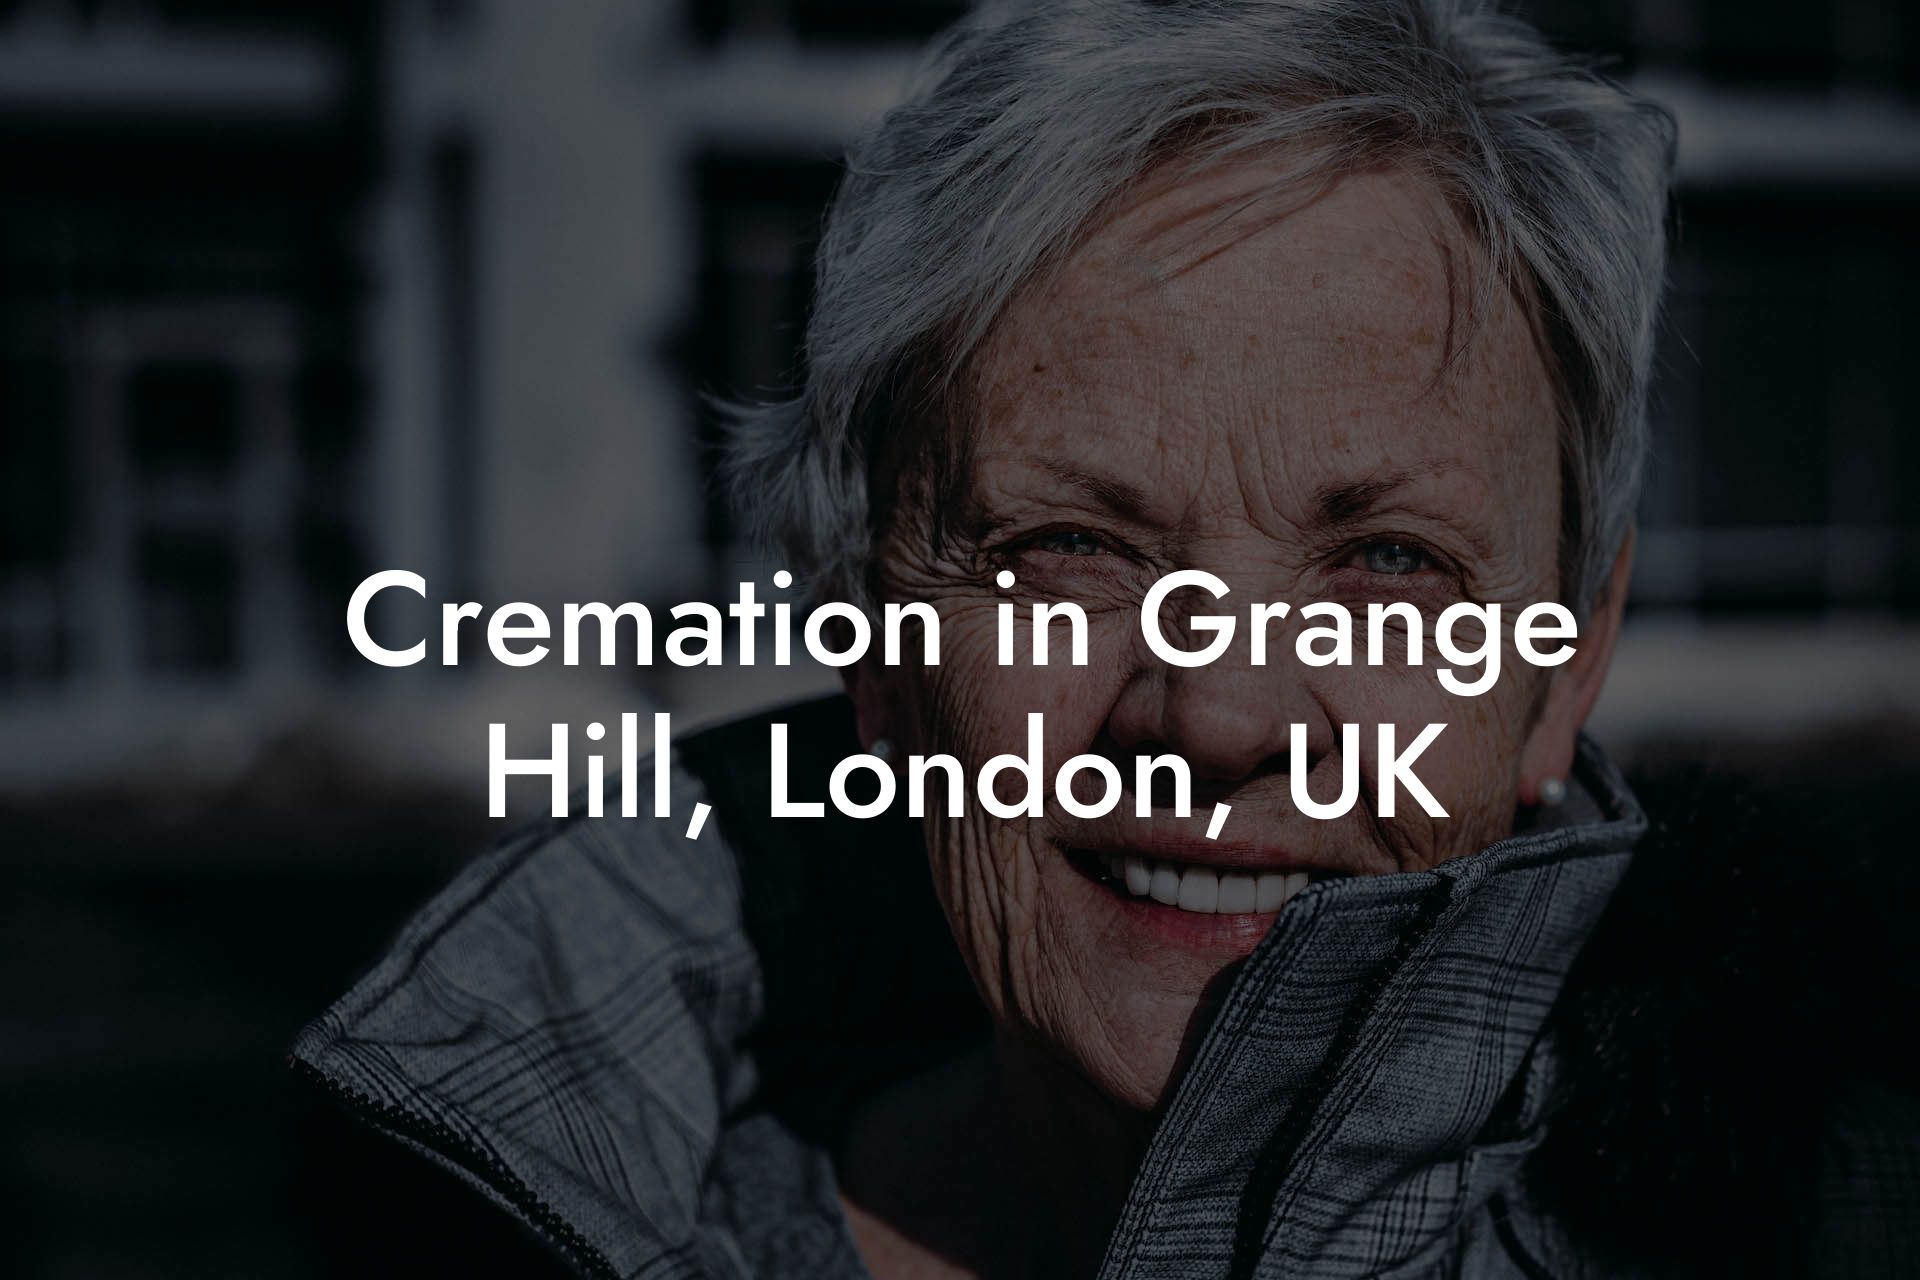 Cremation in Grange Hill, London, UK